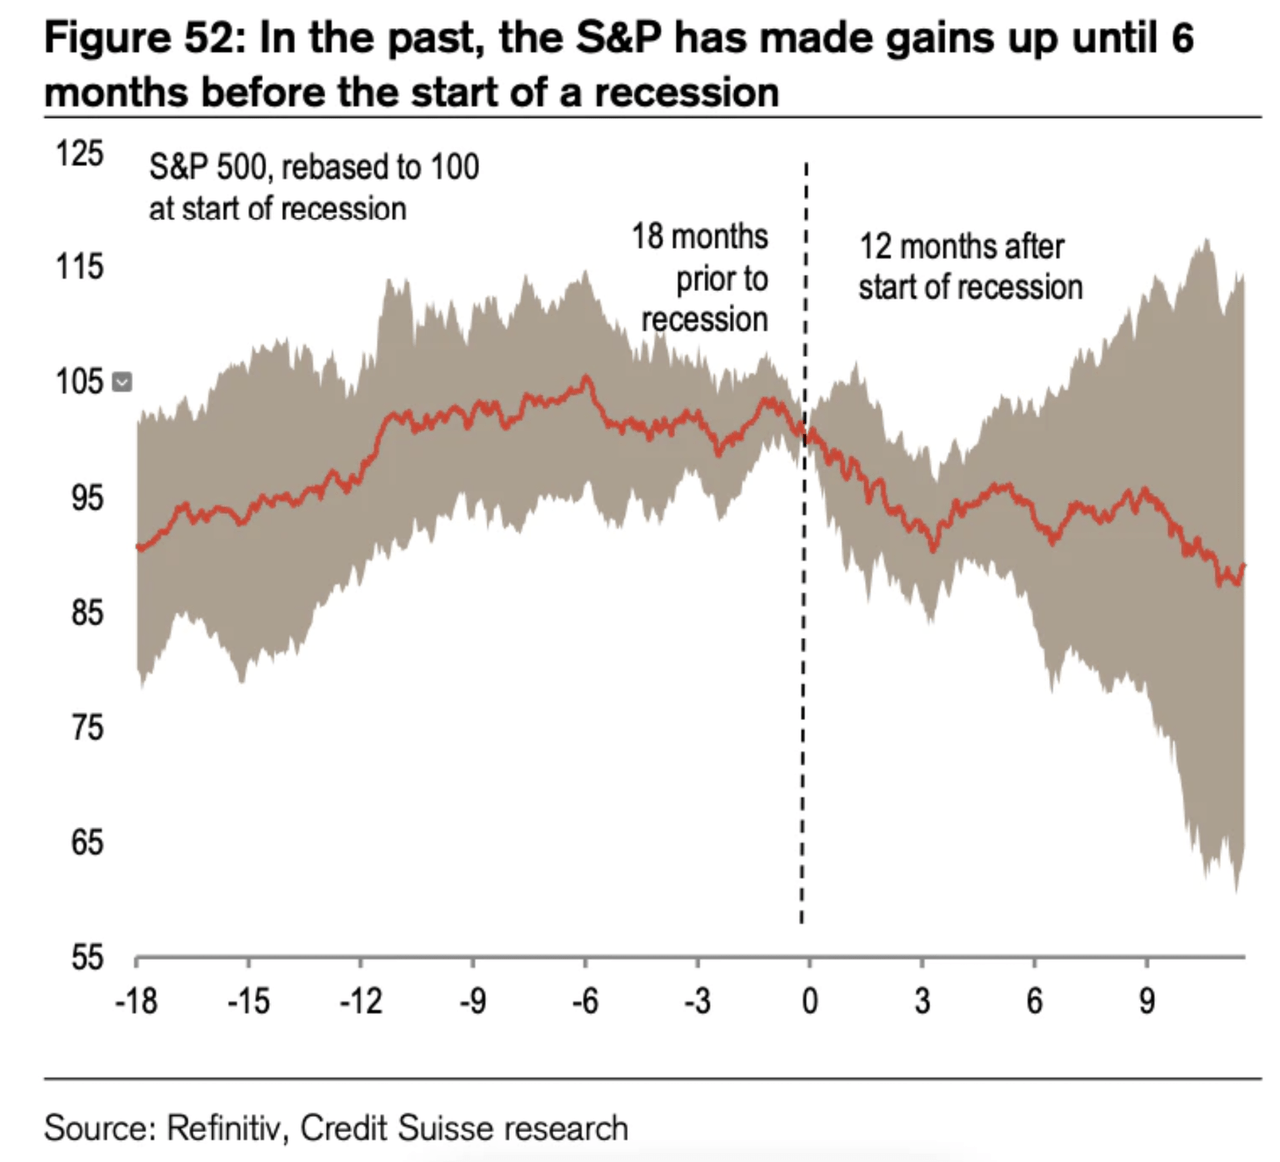 S&P 500 performance around recessions